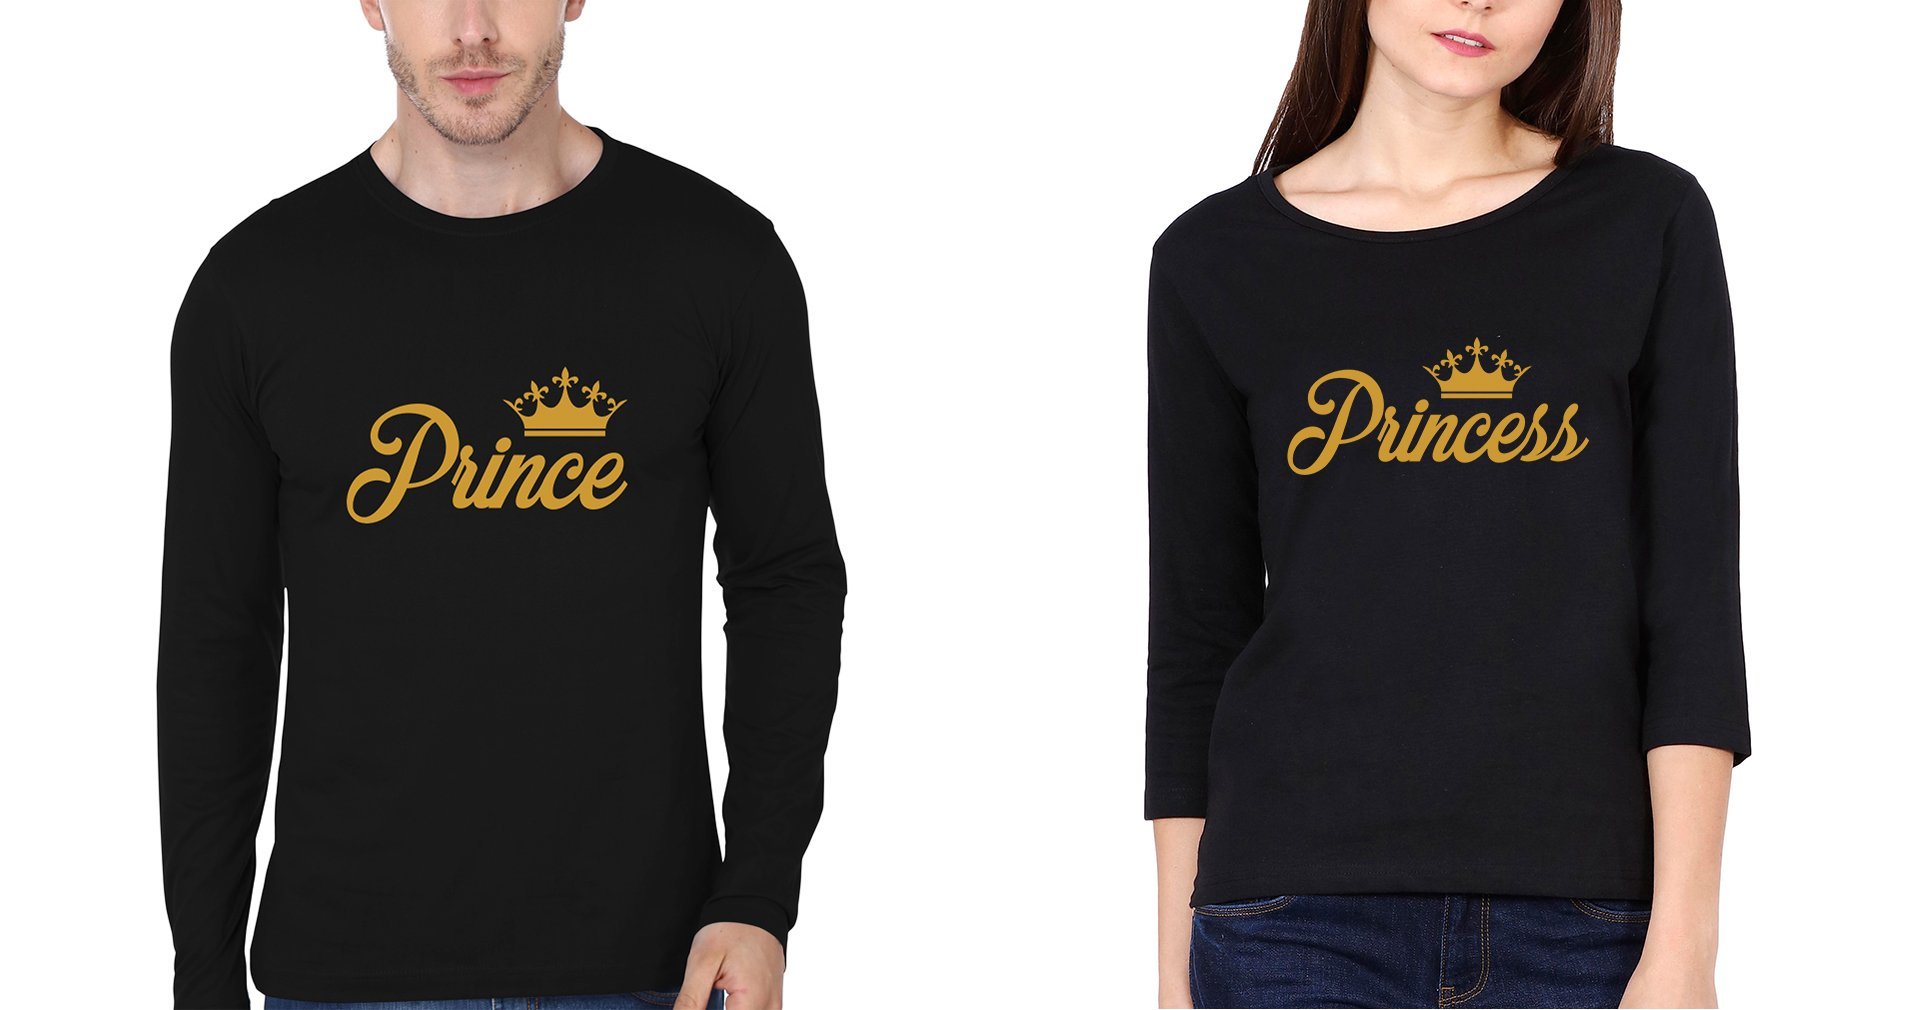 Prince & Princess Couple Full Sleeves T-Shirts -FunkyTees